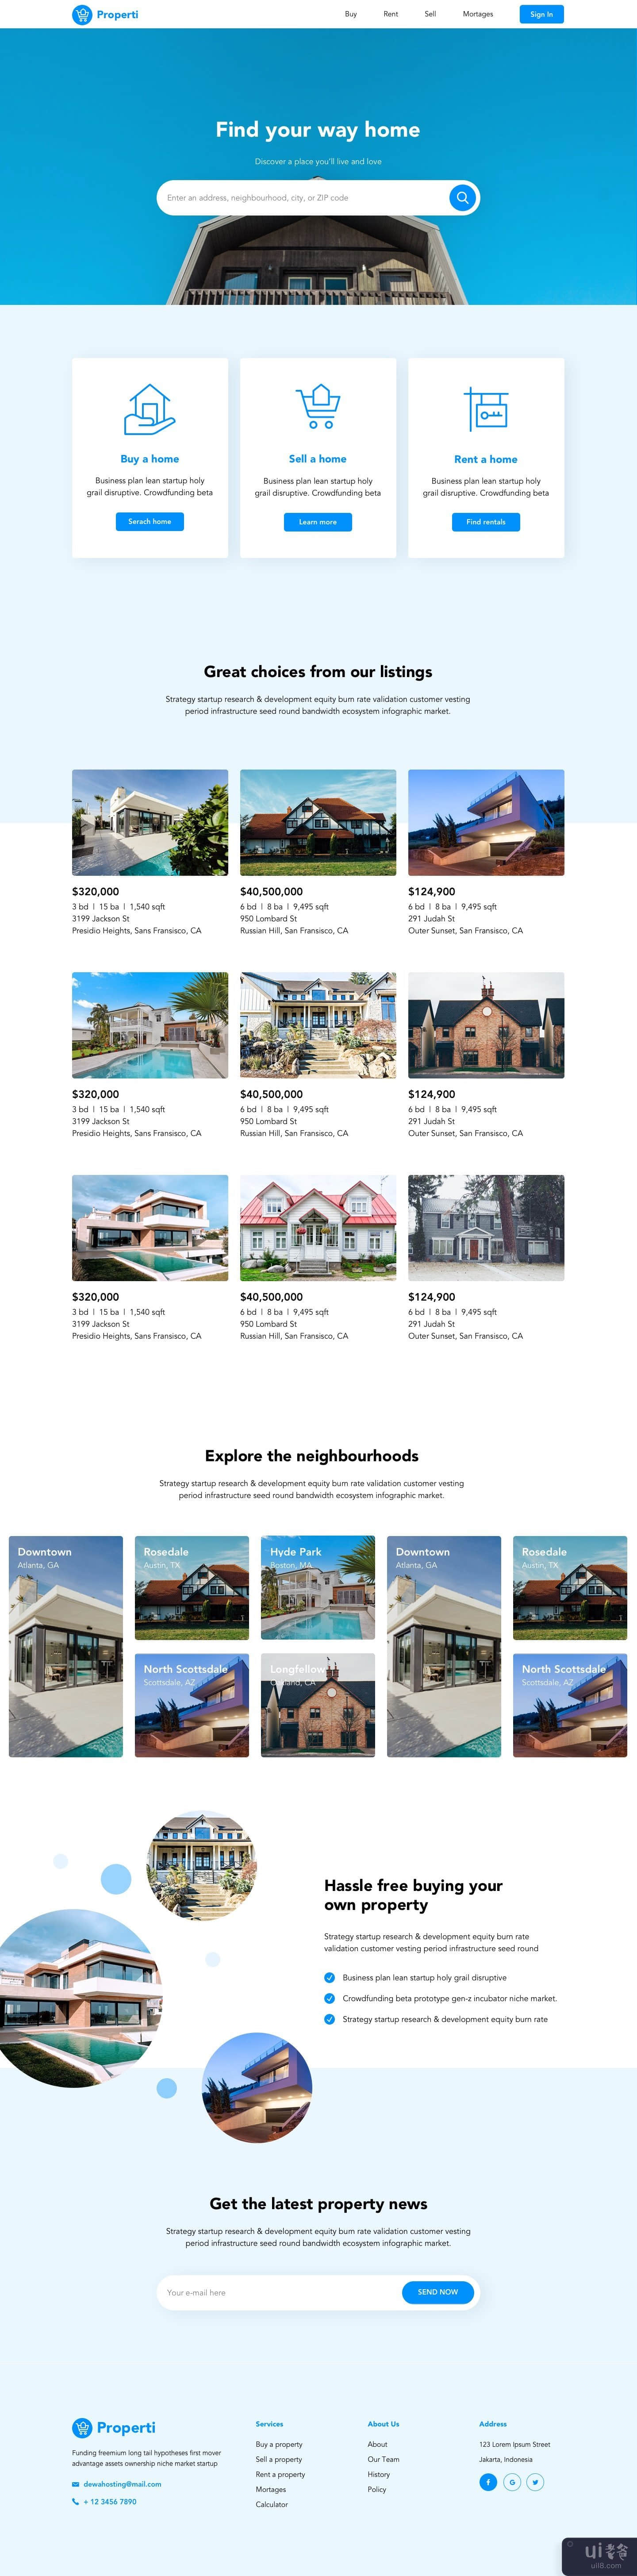 Properti - 房地产网页模板(Properti - Real Estate Web Template)插图